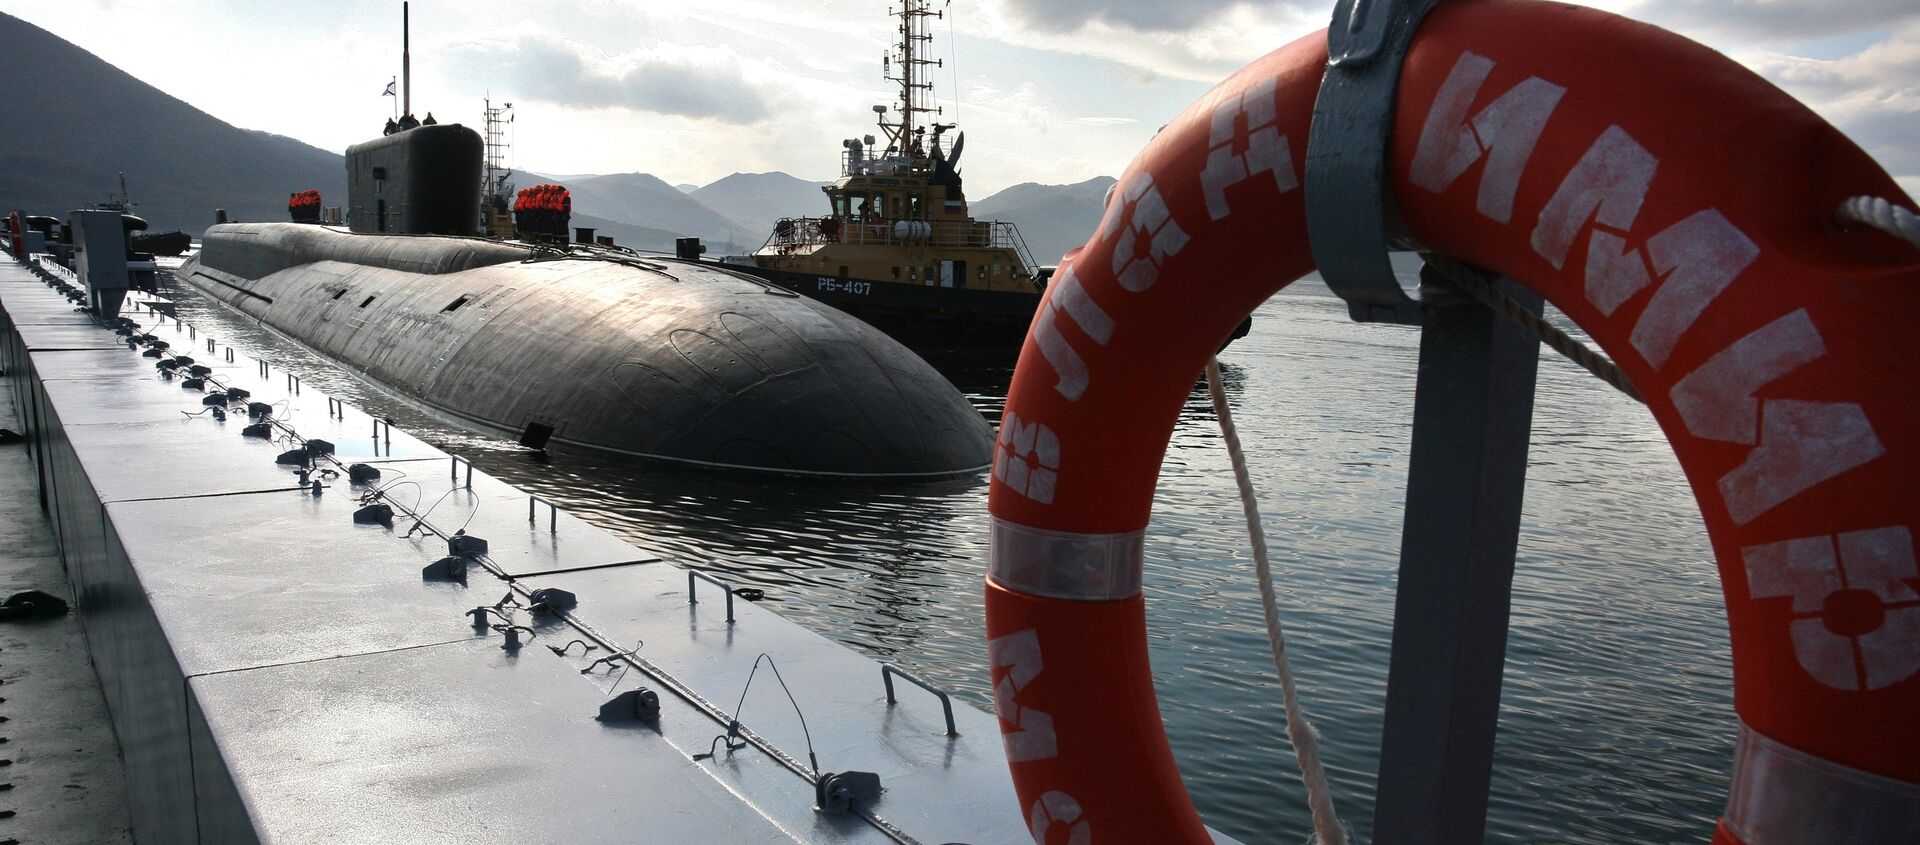 The Russian 955 Borei Vladimir Monomakh nuclear-powered submarine has arrived at its habitual base Vilyuchinsk in Kamchatka - Sputnik International, 1920, 12.12.2020